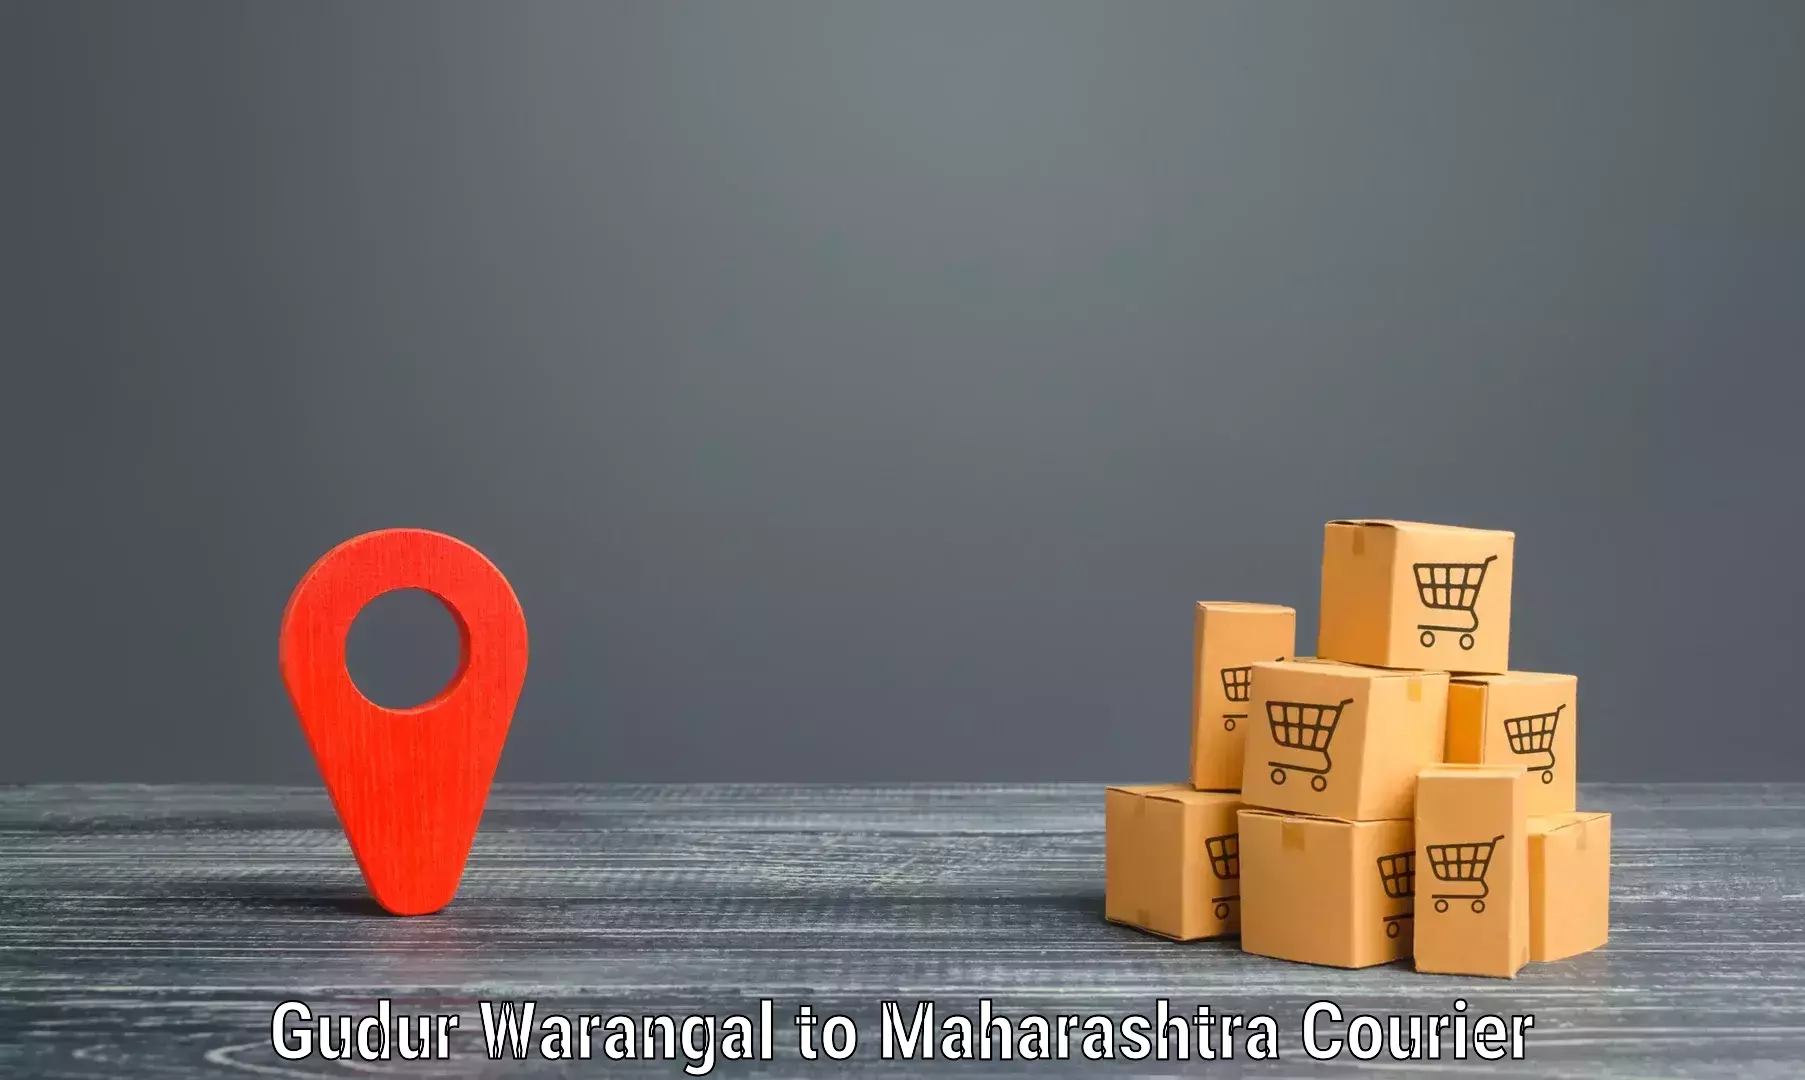 Nationwide delivery network Gudur Warangal to Ballarpur